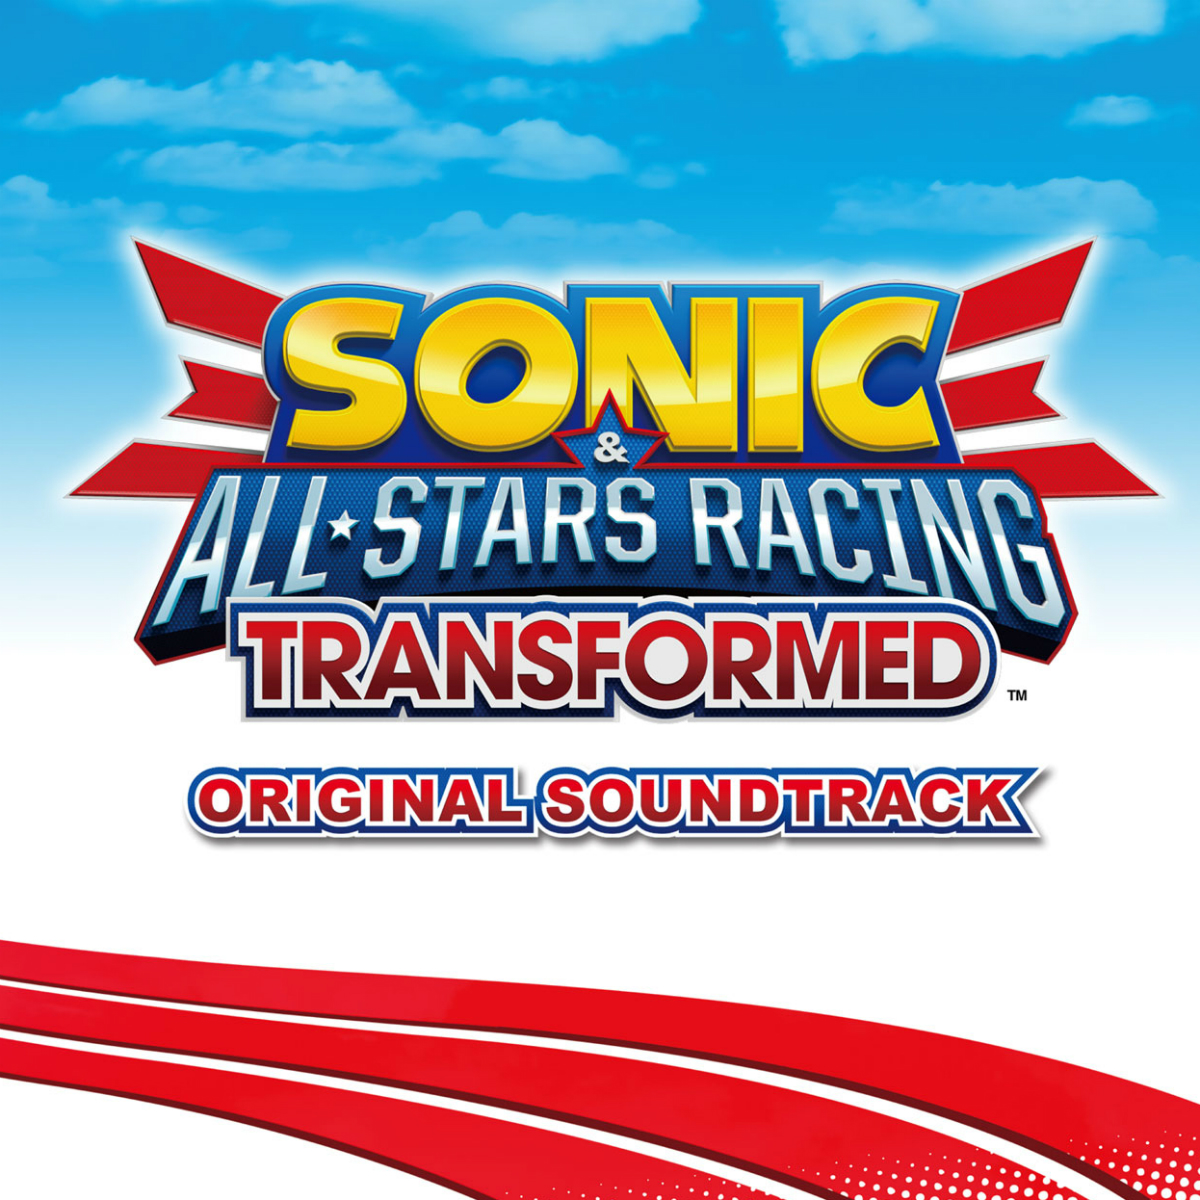 Sonic__All_Stars_Racing_Transformed_Original_Soundtrack__cover1200x1200.jpg